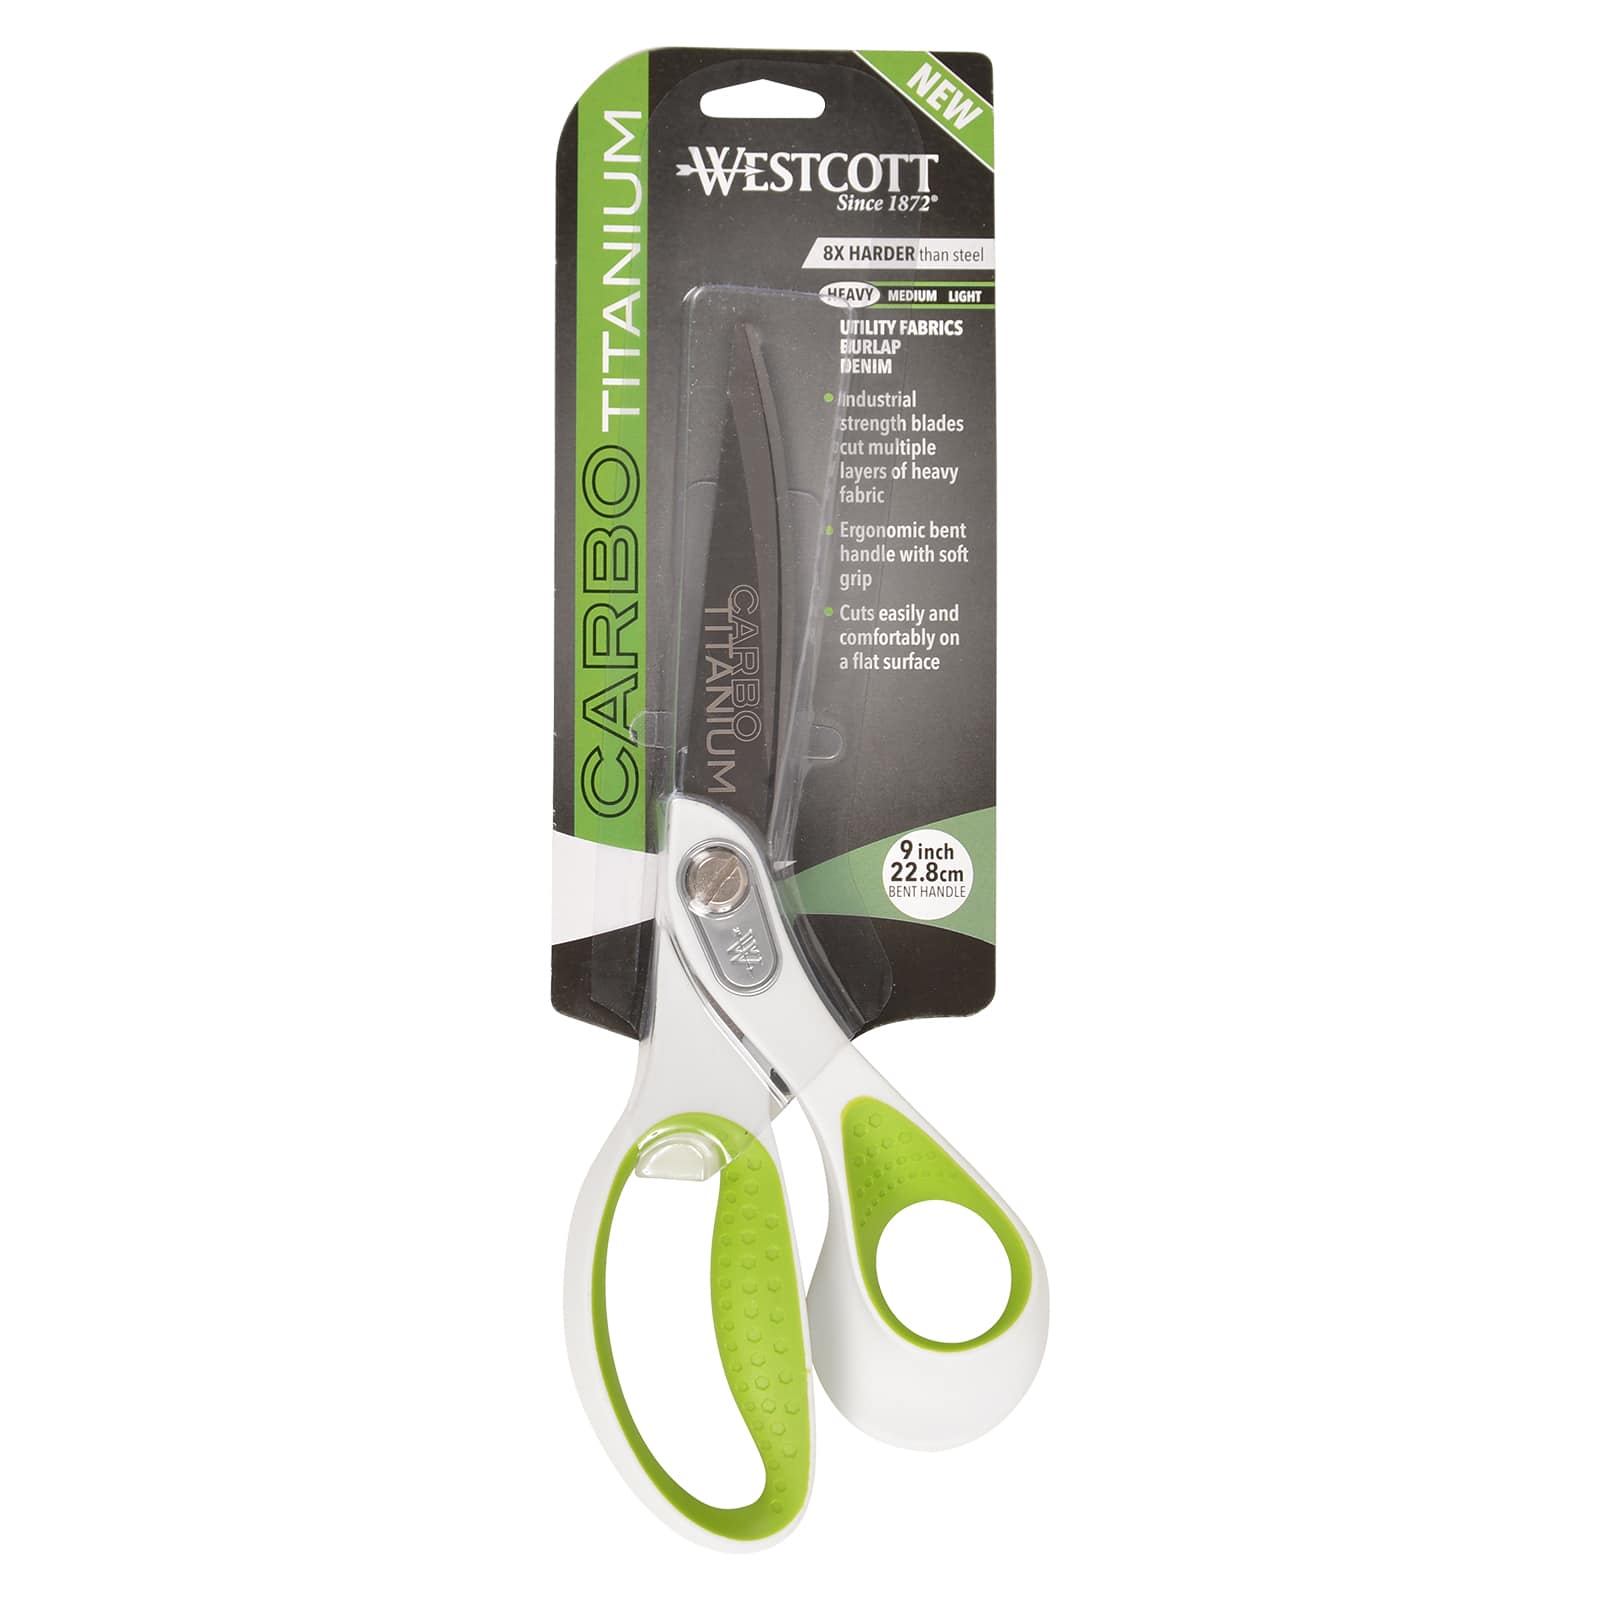 Westcott® Heavy-Duty Crafting & Quilting Scissors, Michaels